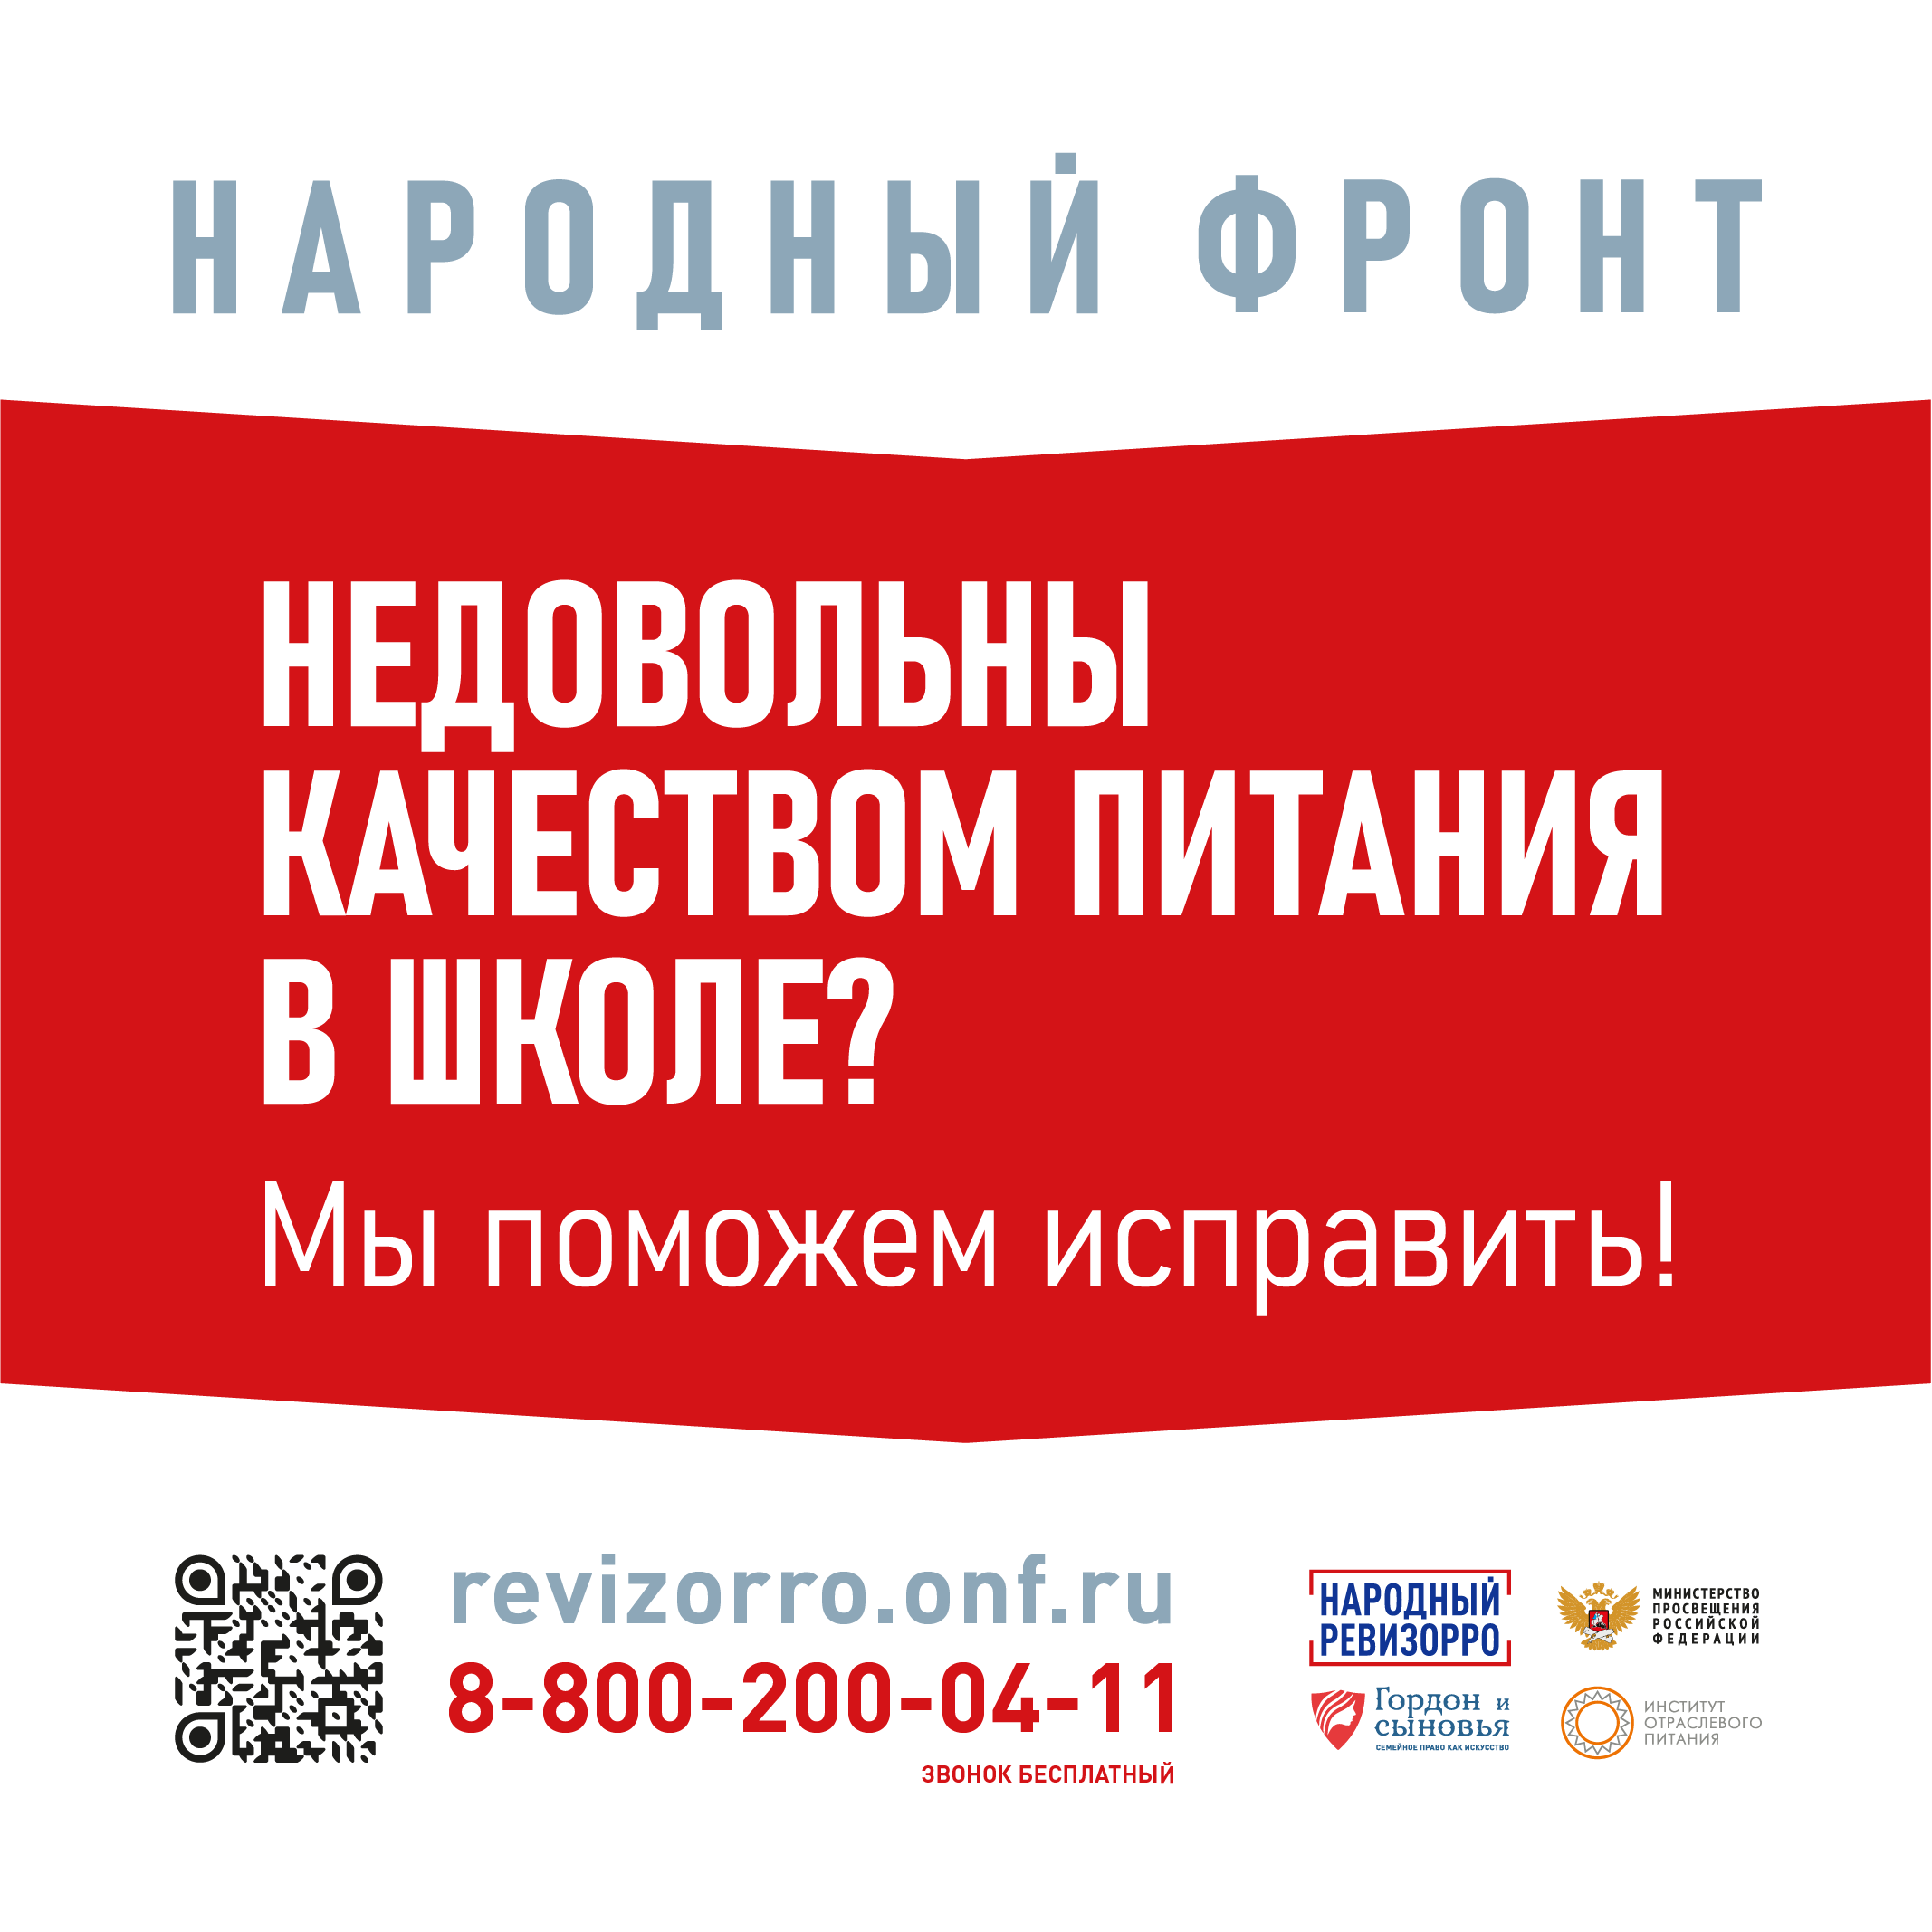 <a href="https://revizorro.onf.ru/" target="_blank"> <img src="https://static.tildacdn.com/tild3833-6266-4431-b431-393538336462/130x2.png" width="250" height="130" title="revizorro.onf.ru" border="0" /> </a>